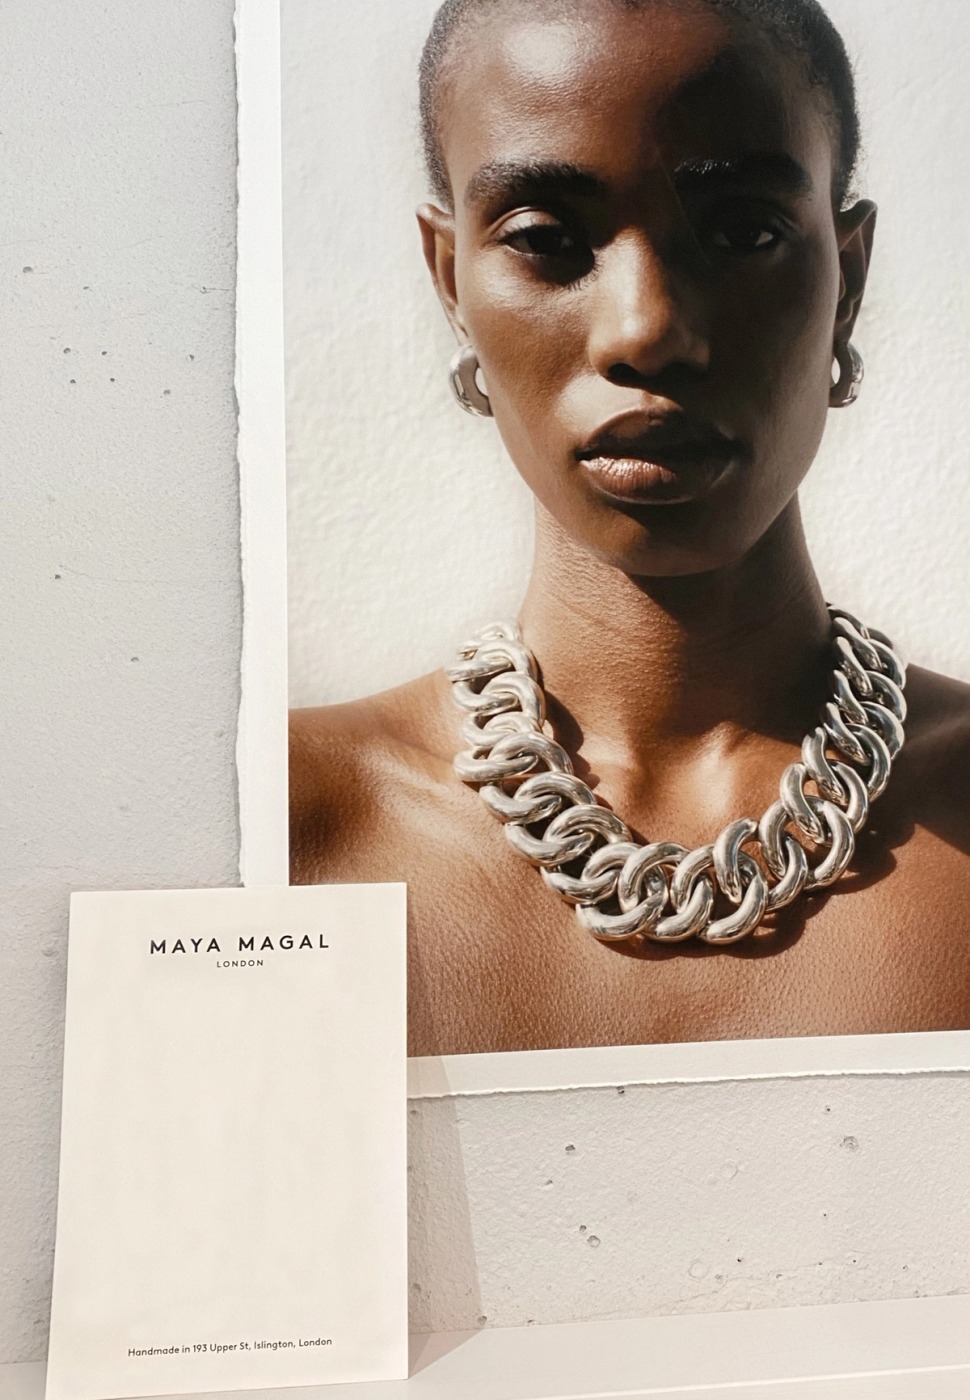 Maya Magal London rebrand — creative direction, strategy, branding + messaging